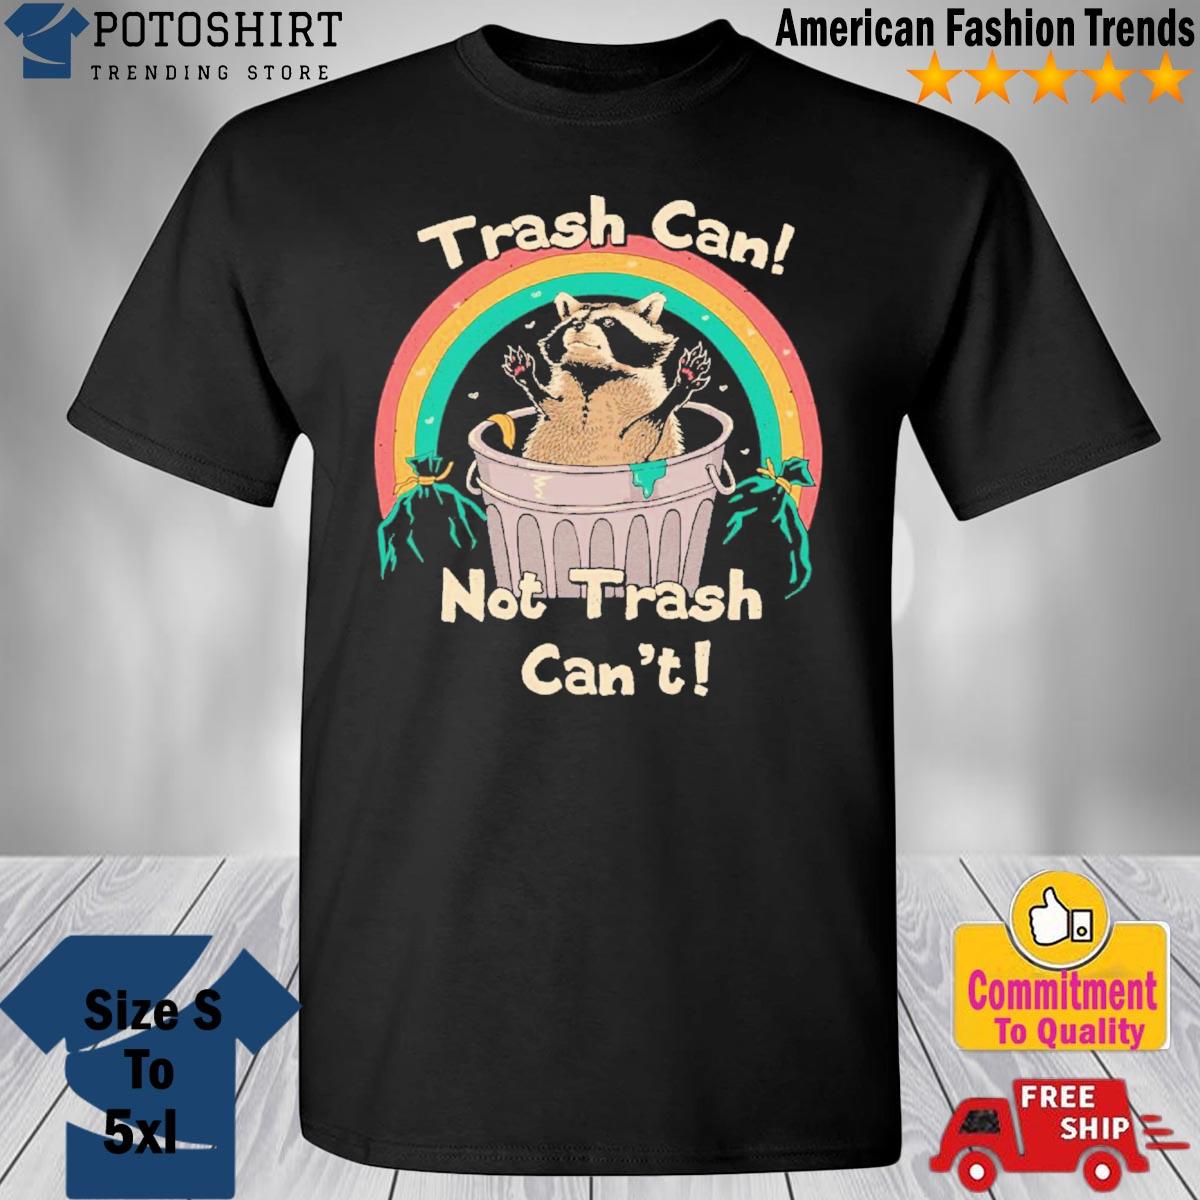 Not trash can't Trash Talker! T-Shirt